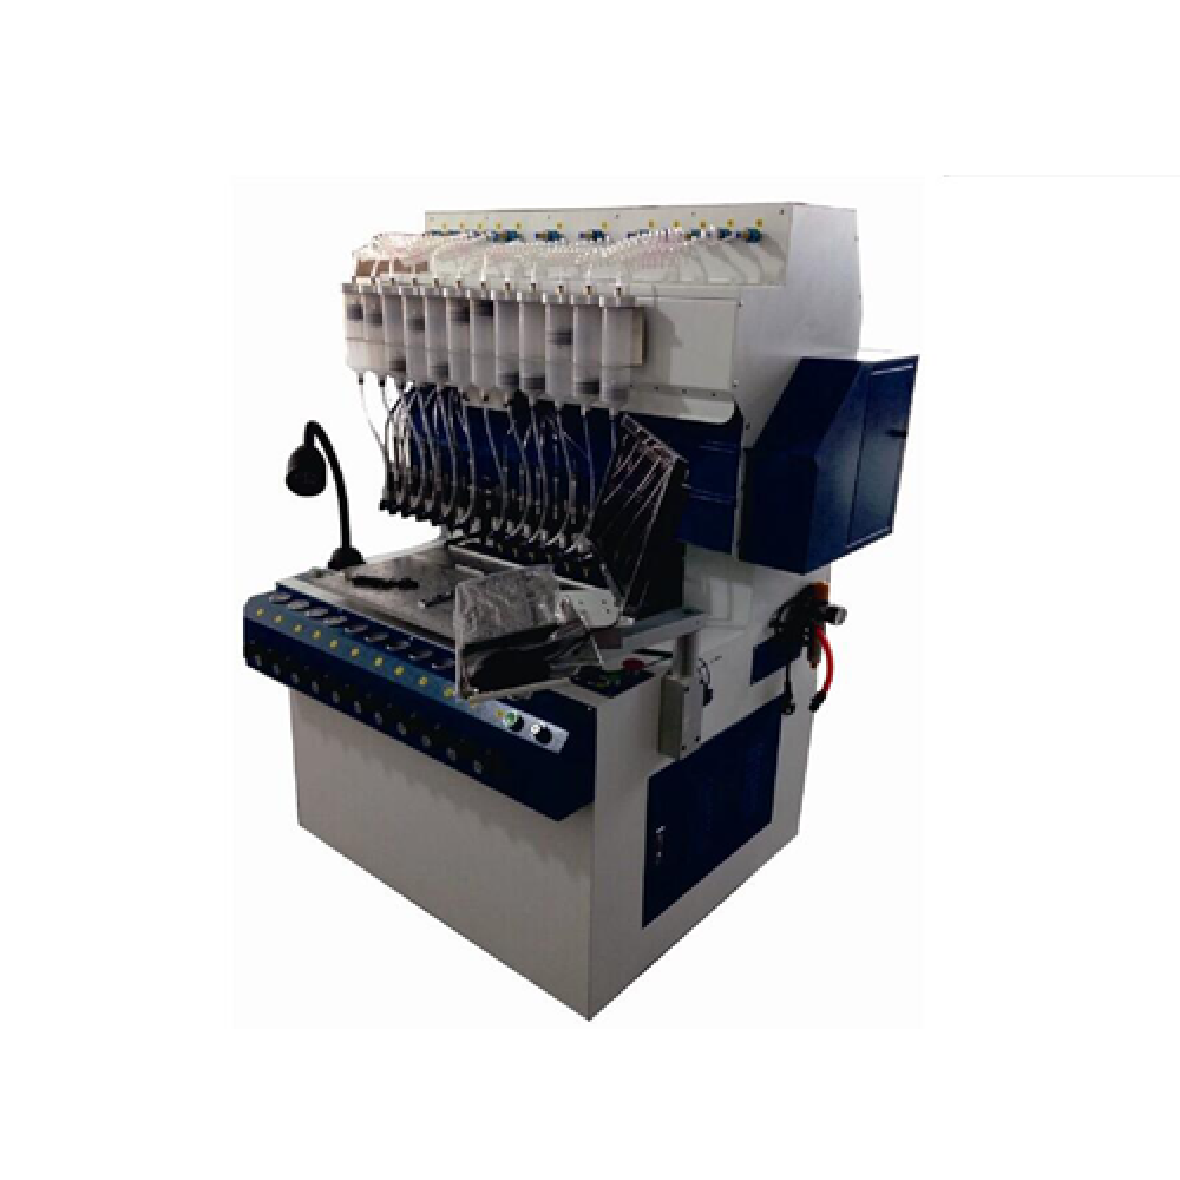 Zhuozhan Novel Automatic Plastic Dripping Machine, Silica Gel Machine (10-15 colors)